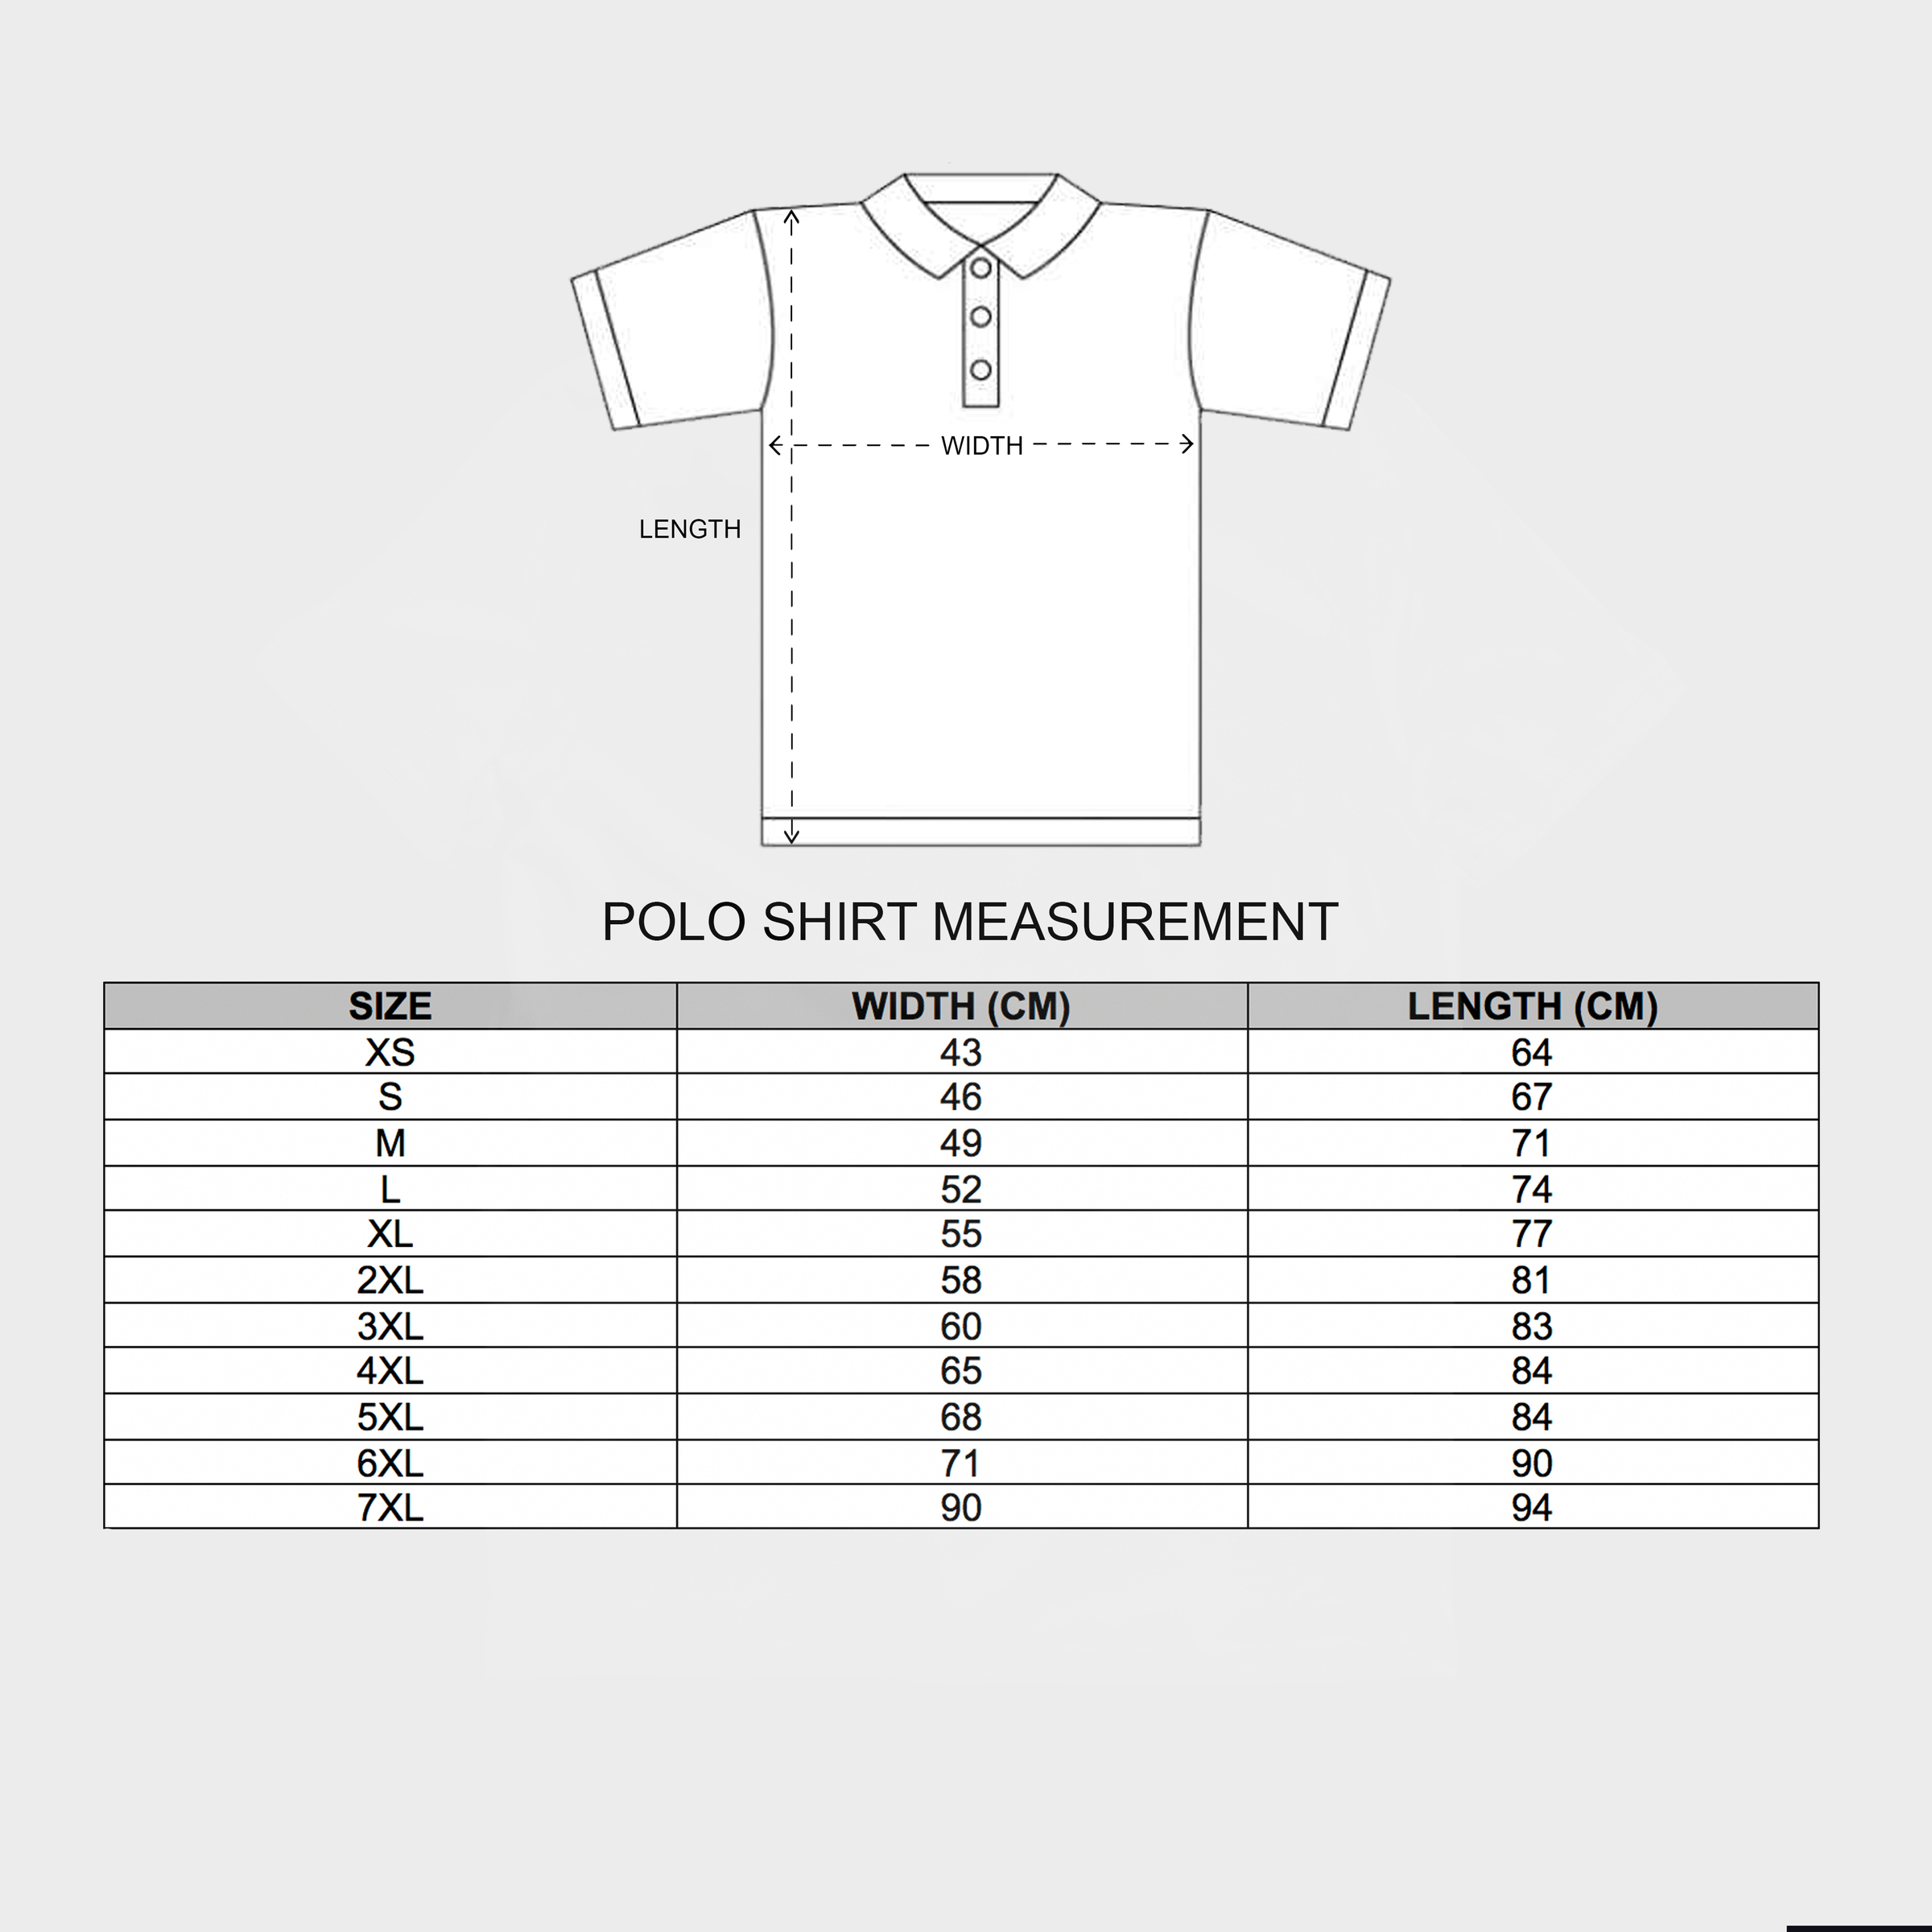 Polo Shirt Measurement.jpg